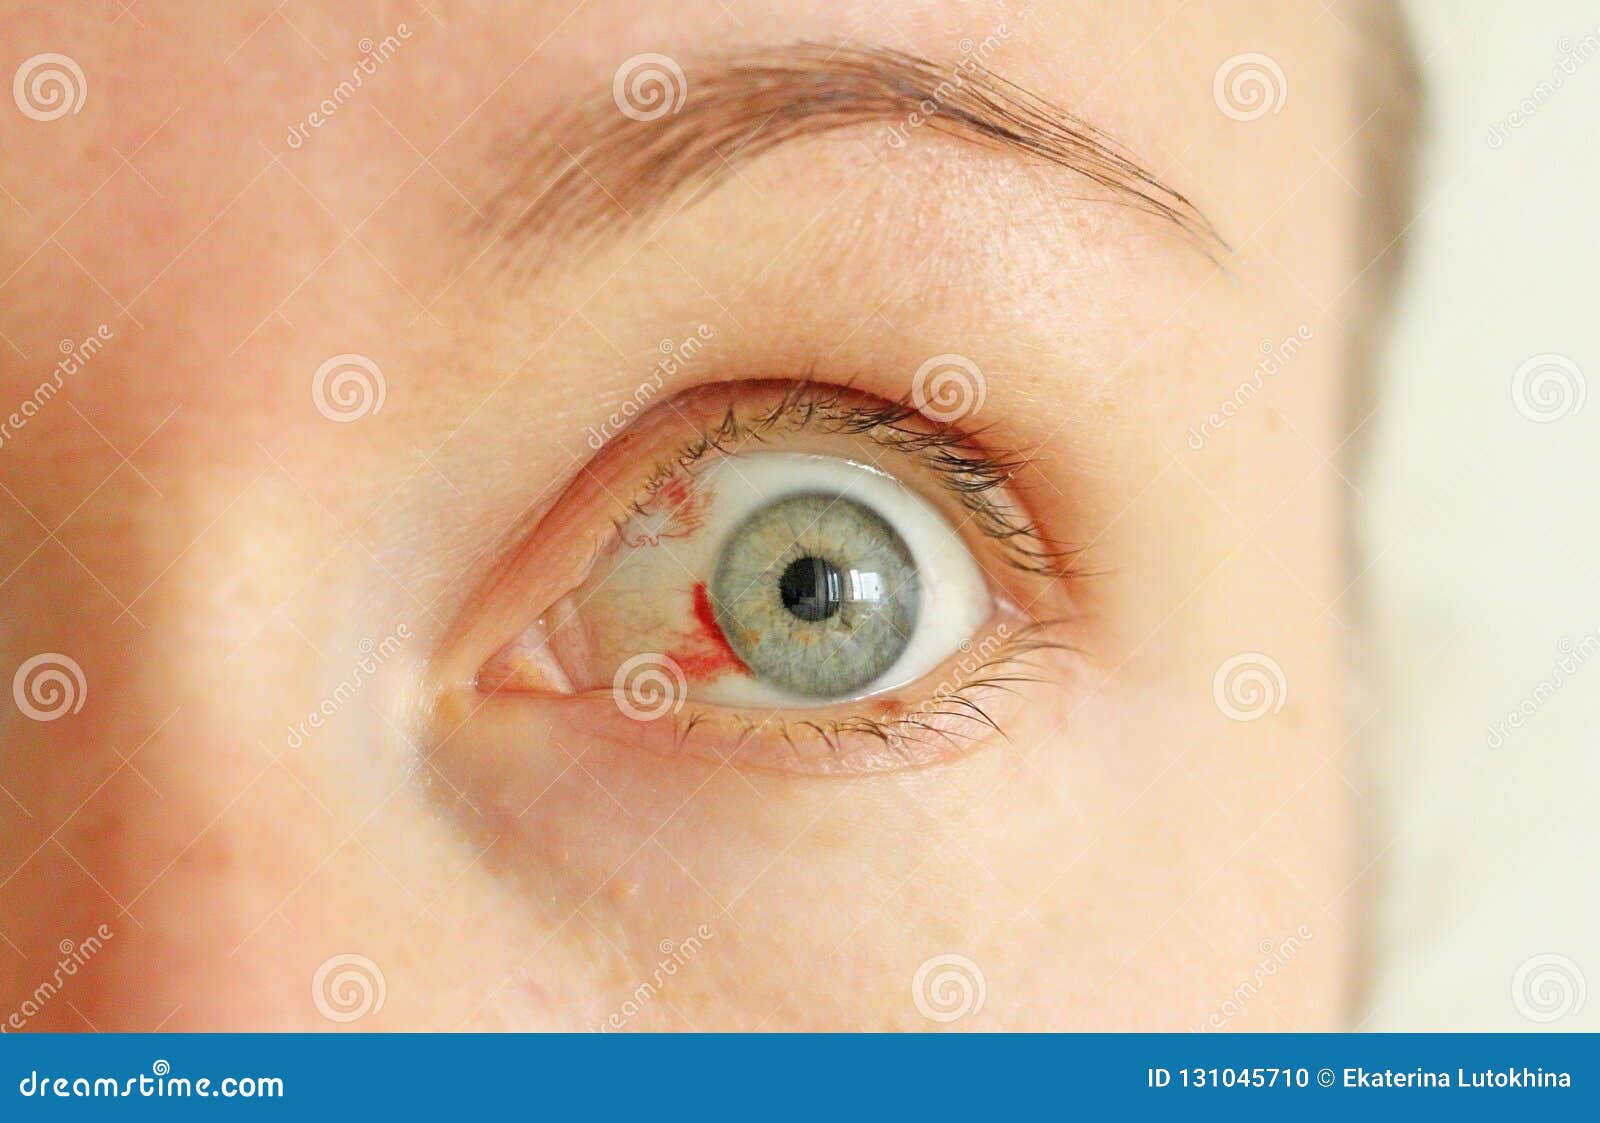 Bloodshot Eye Woman With Burst Blood Vessel In Eye Stock Photo Image